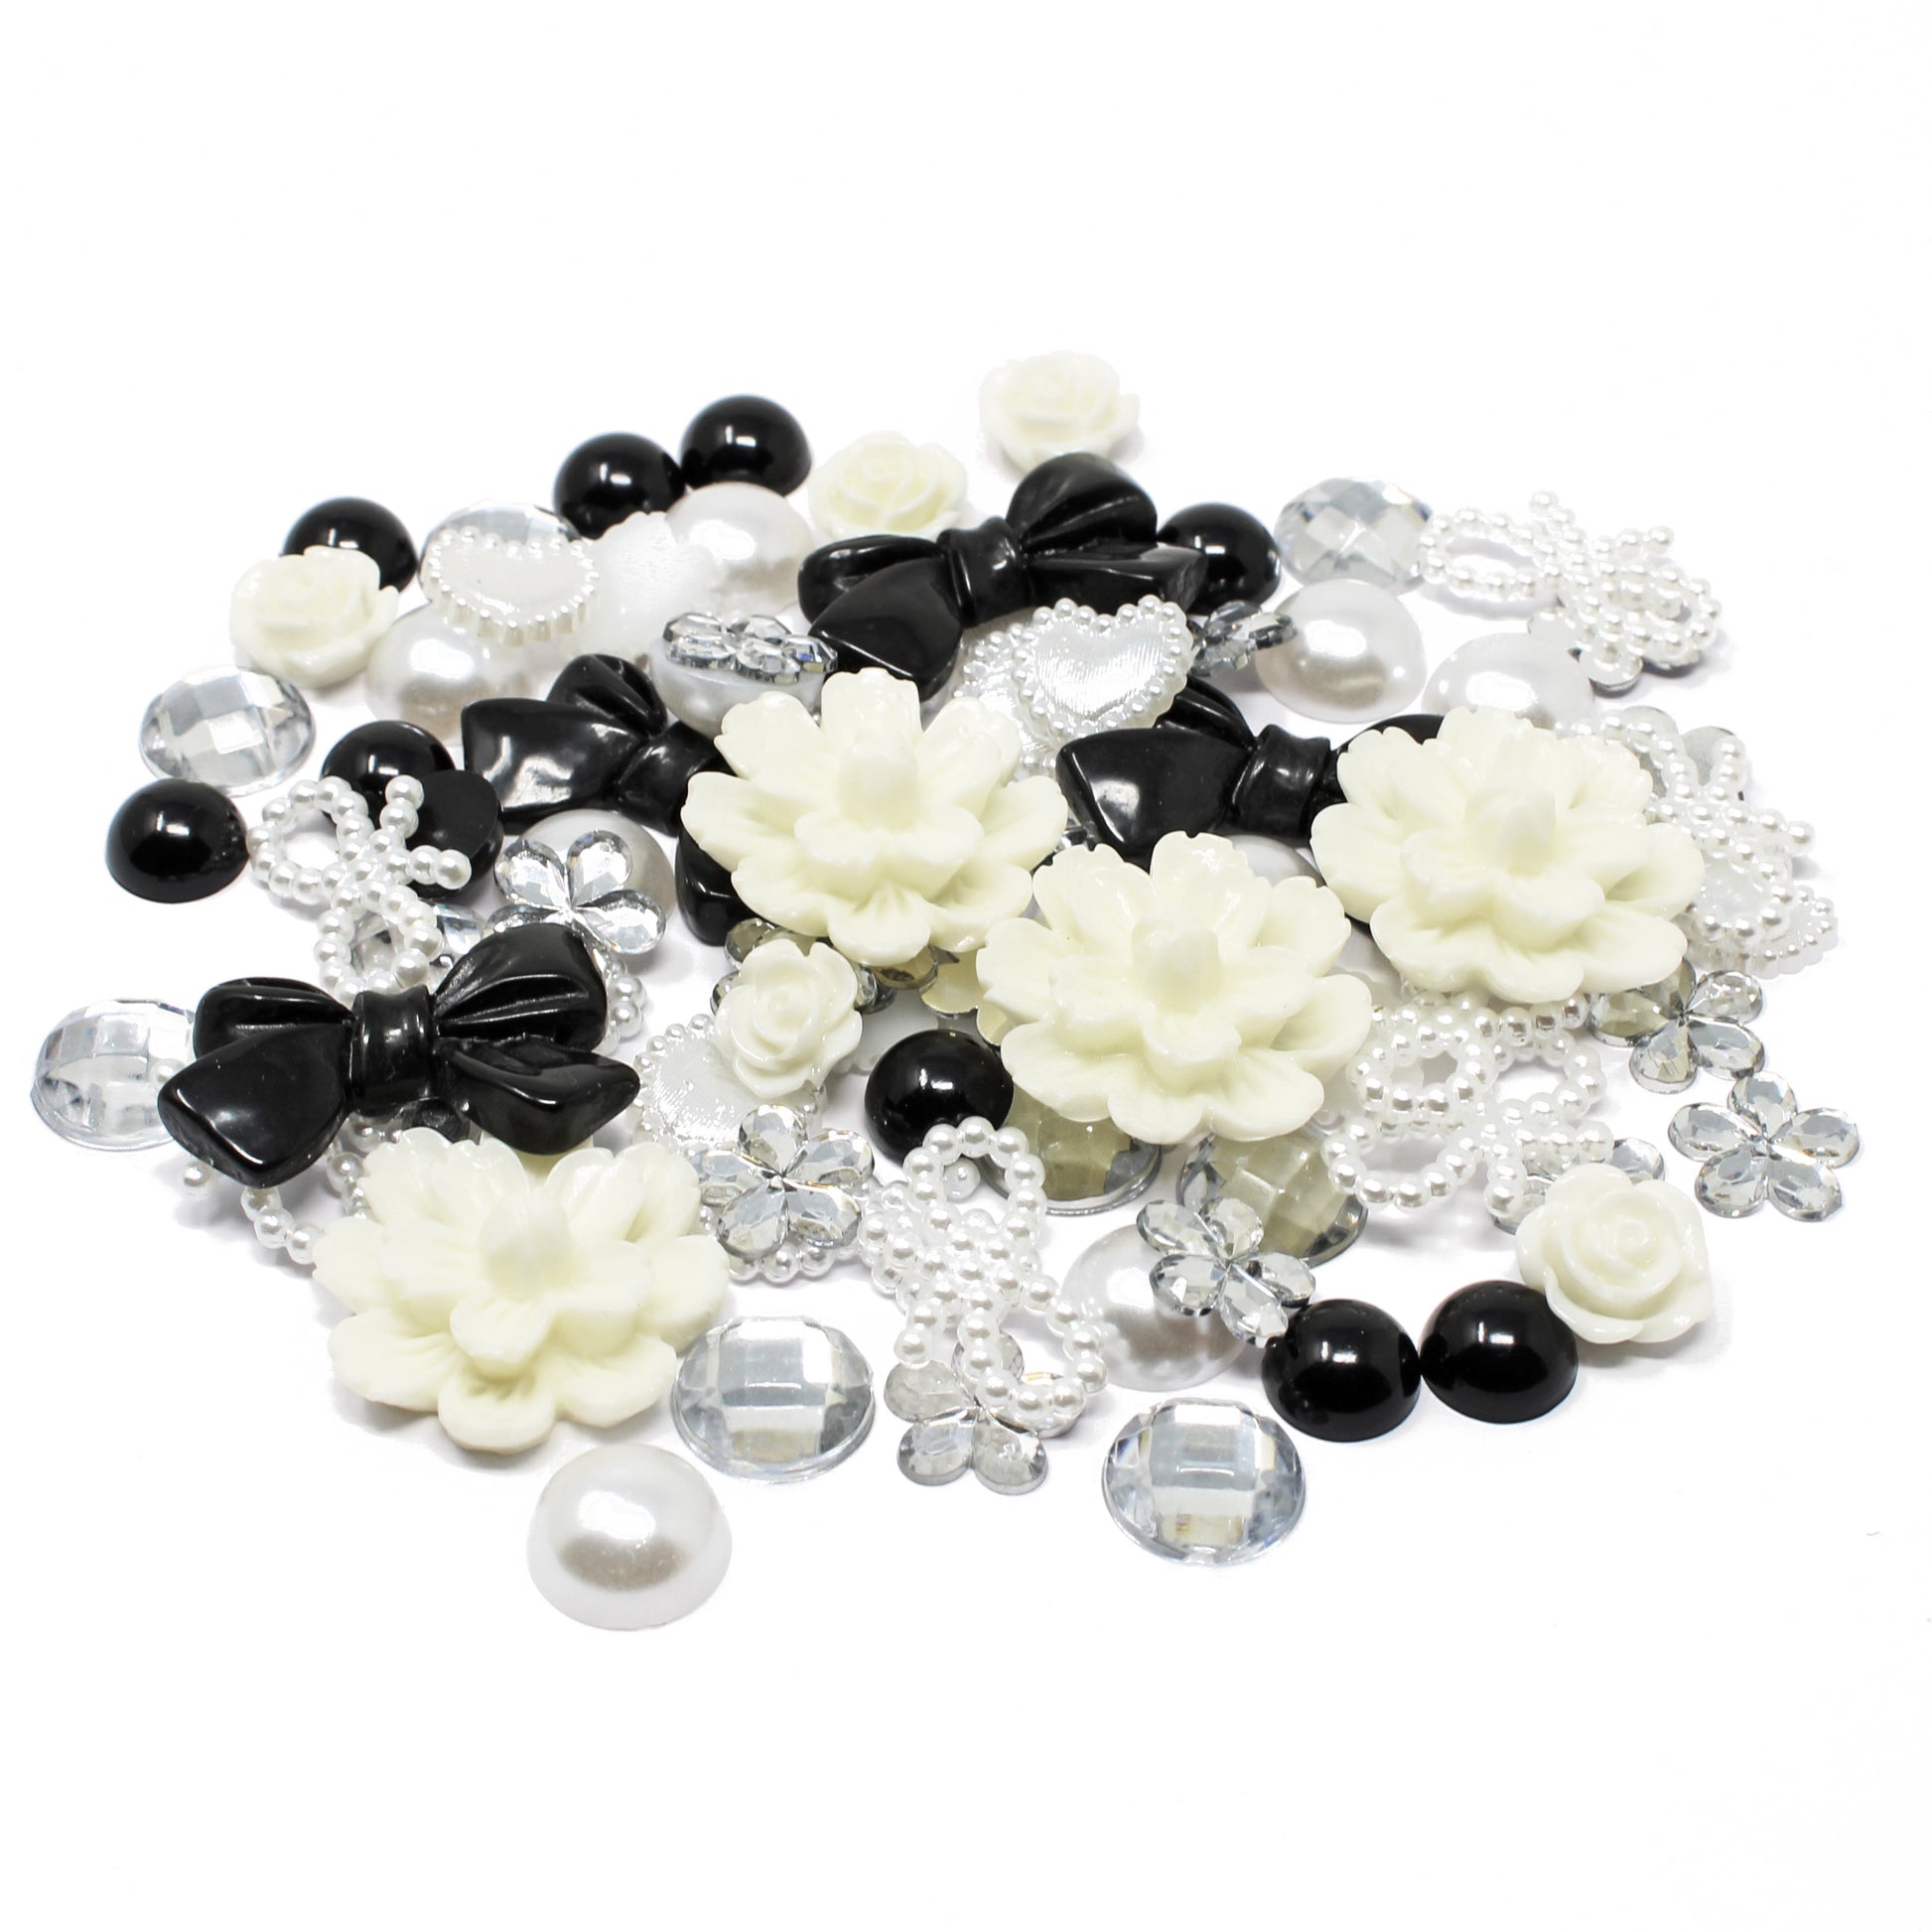 Black & White 80 Mix Resin Craft Embellishment Flatbacks